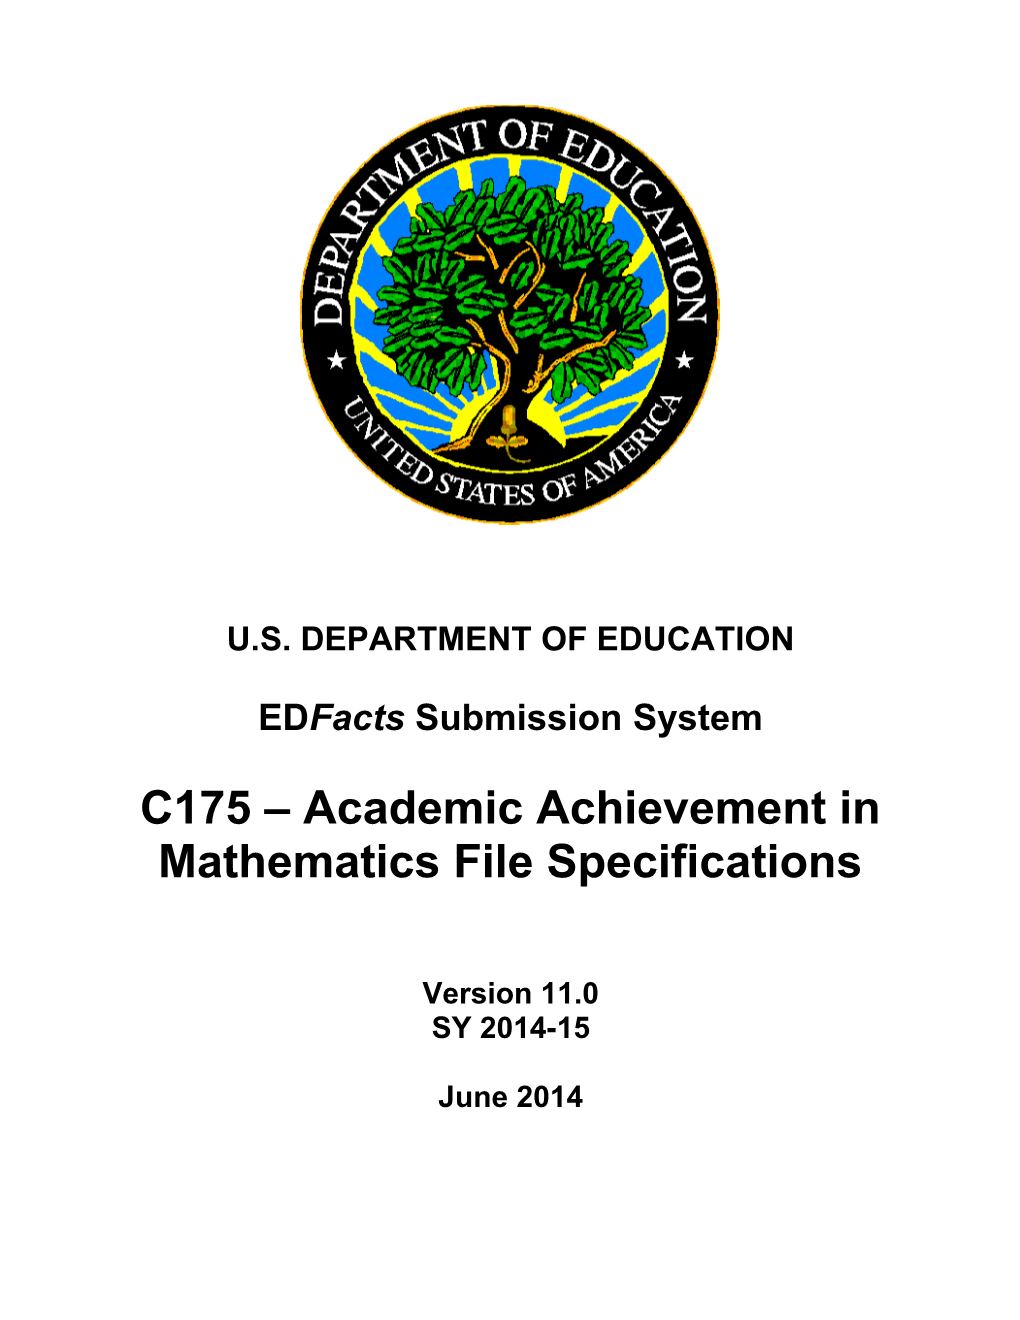 Academic Achievement in Mathematics File Specifications